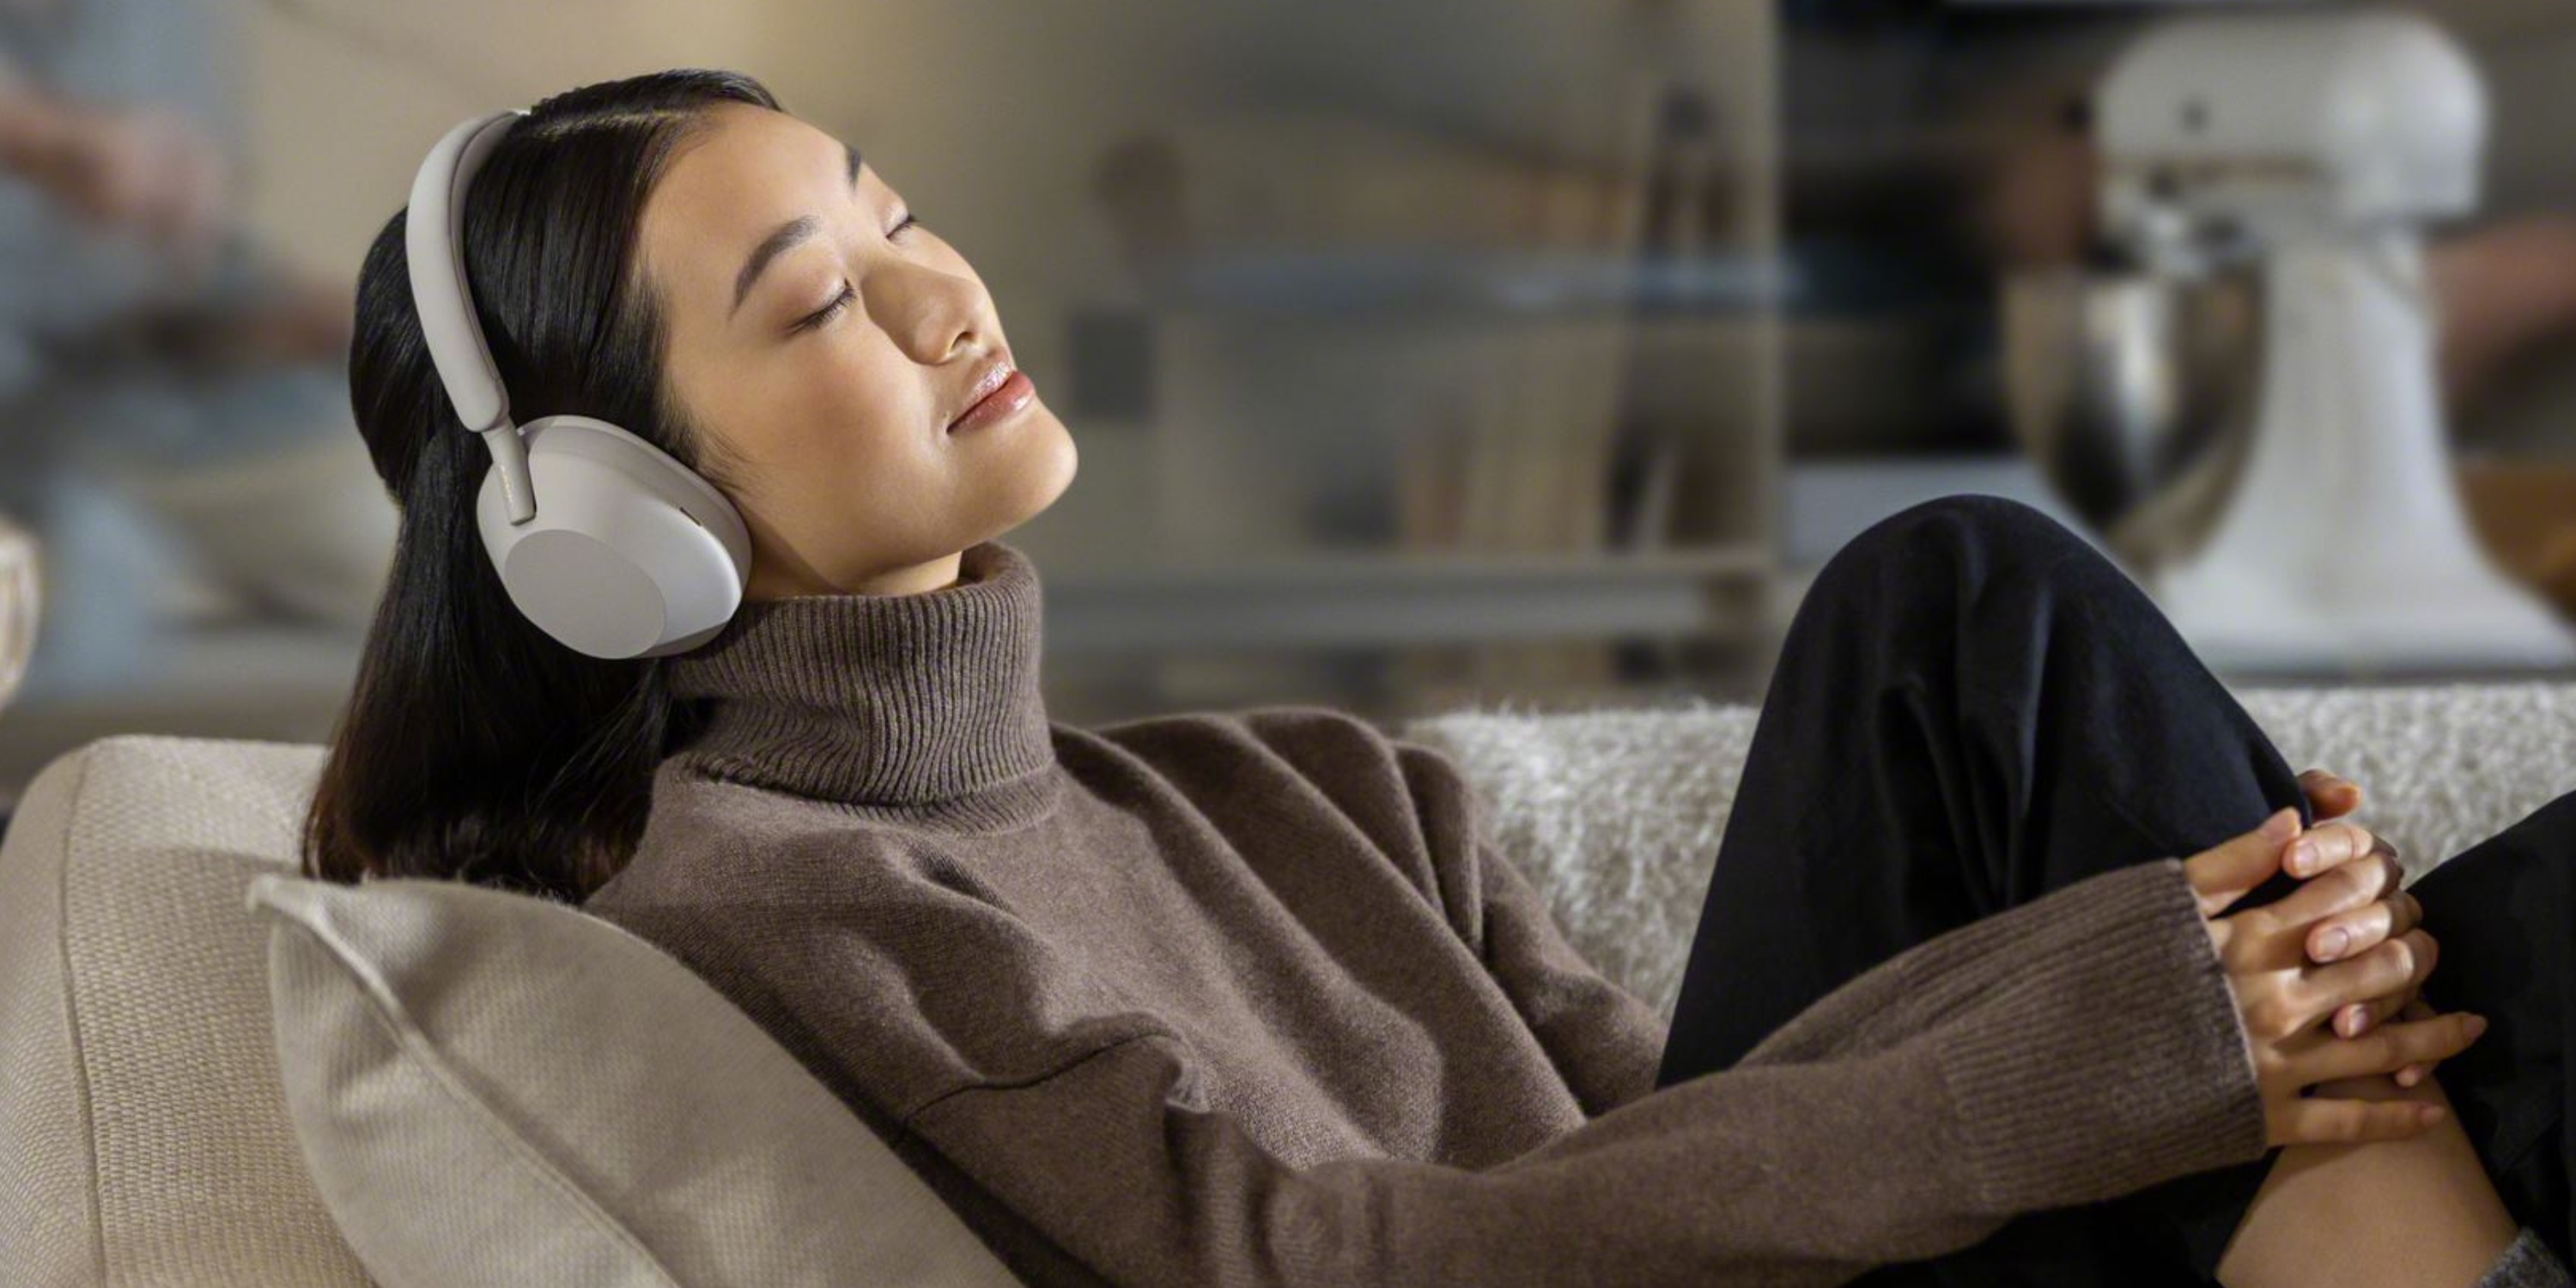 Навушники Sony WH-1000XM5 Wireless Noise Cancelling Headphones (Silver)